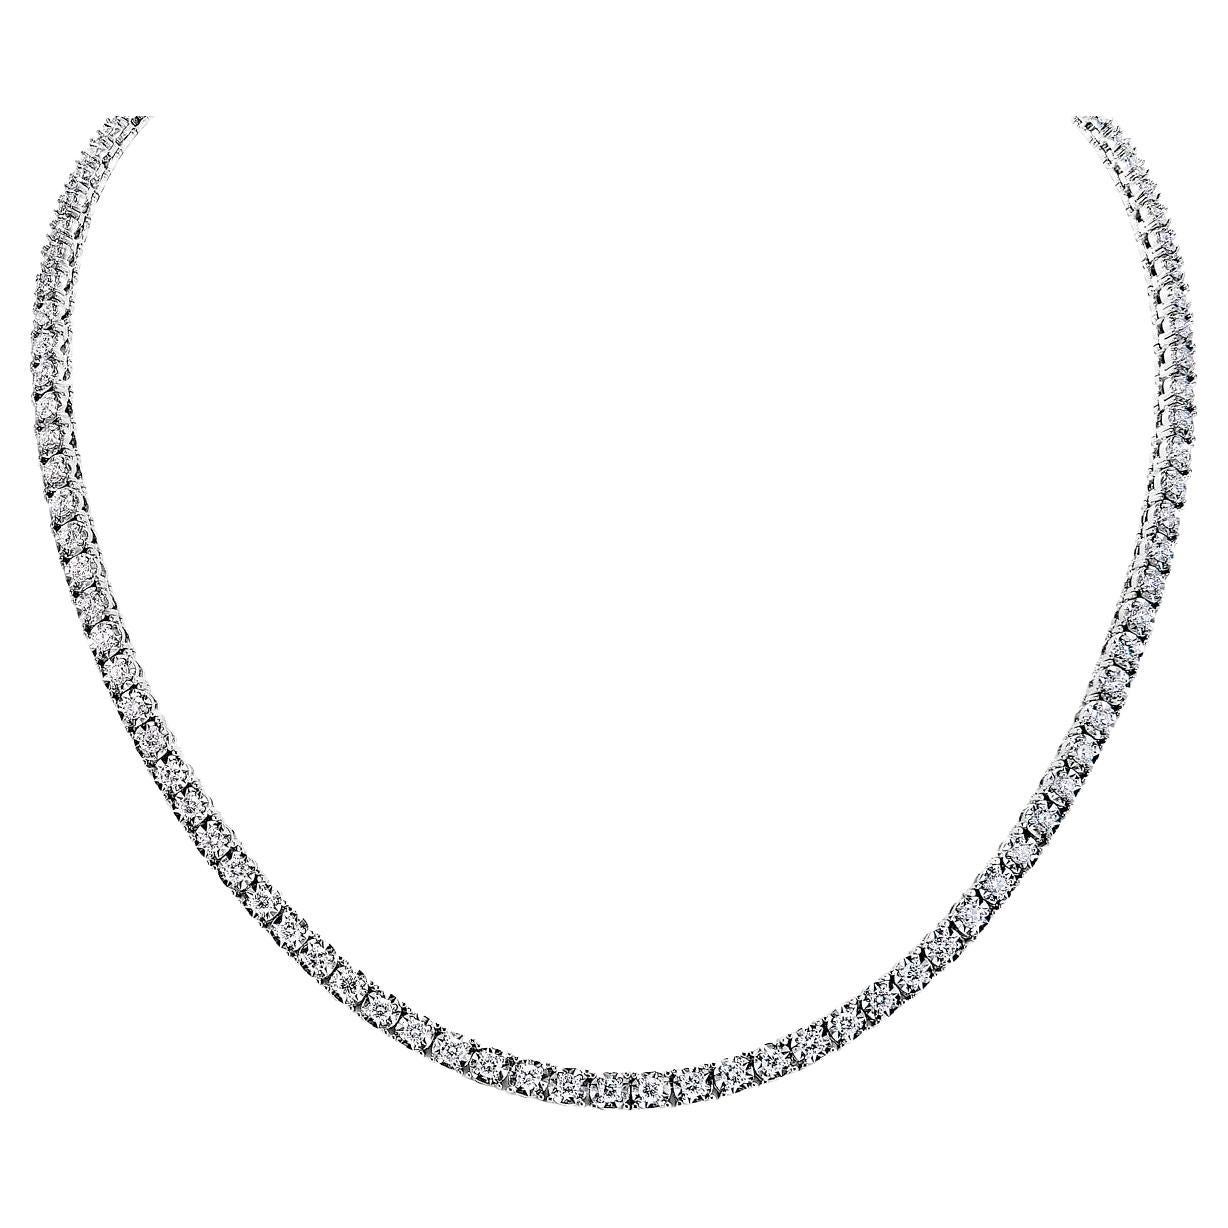 6 Carat Round Brilliant Diamond Tennis Necklace Certified For Sale